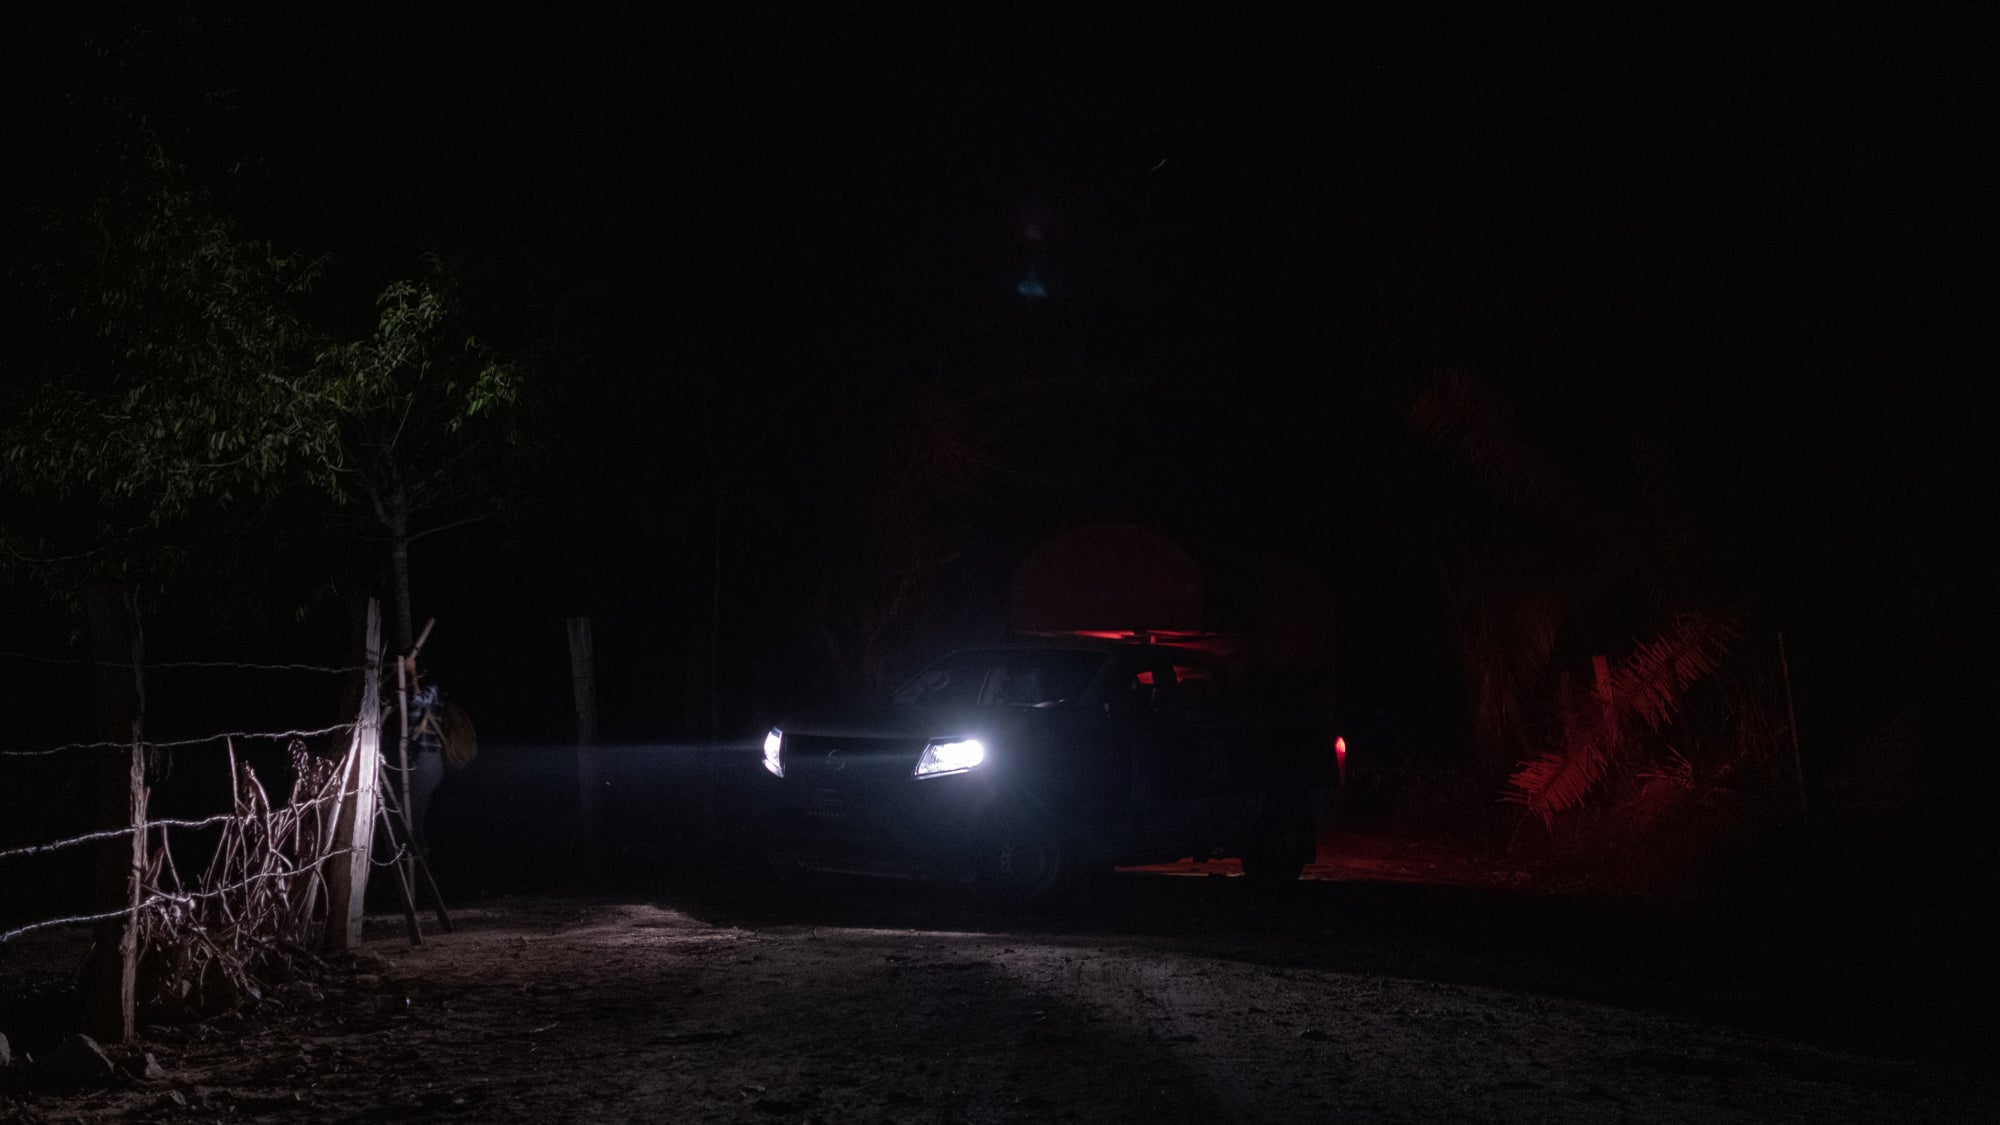 Car with high beams on at night.